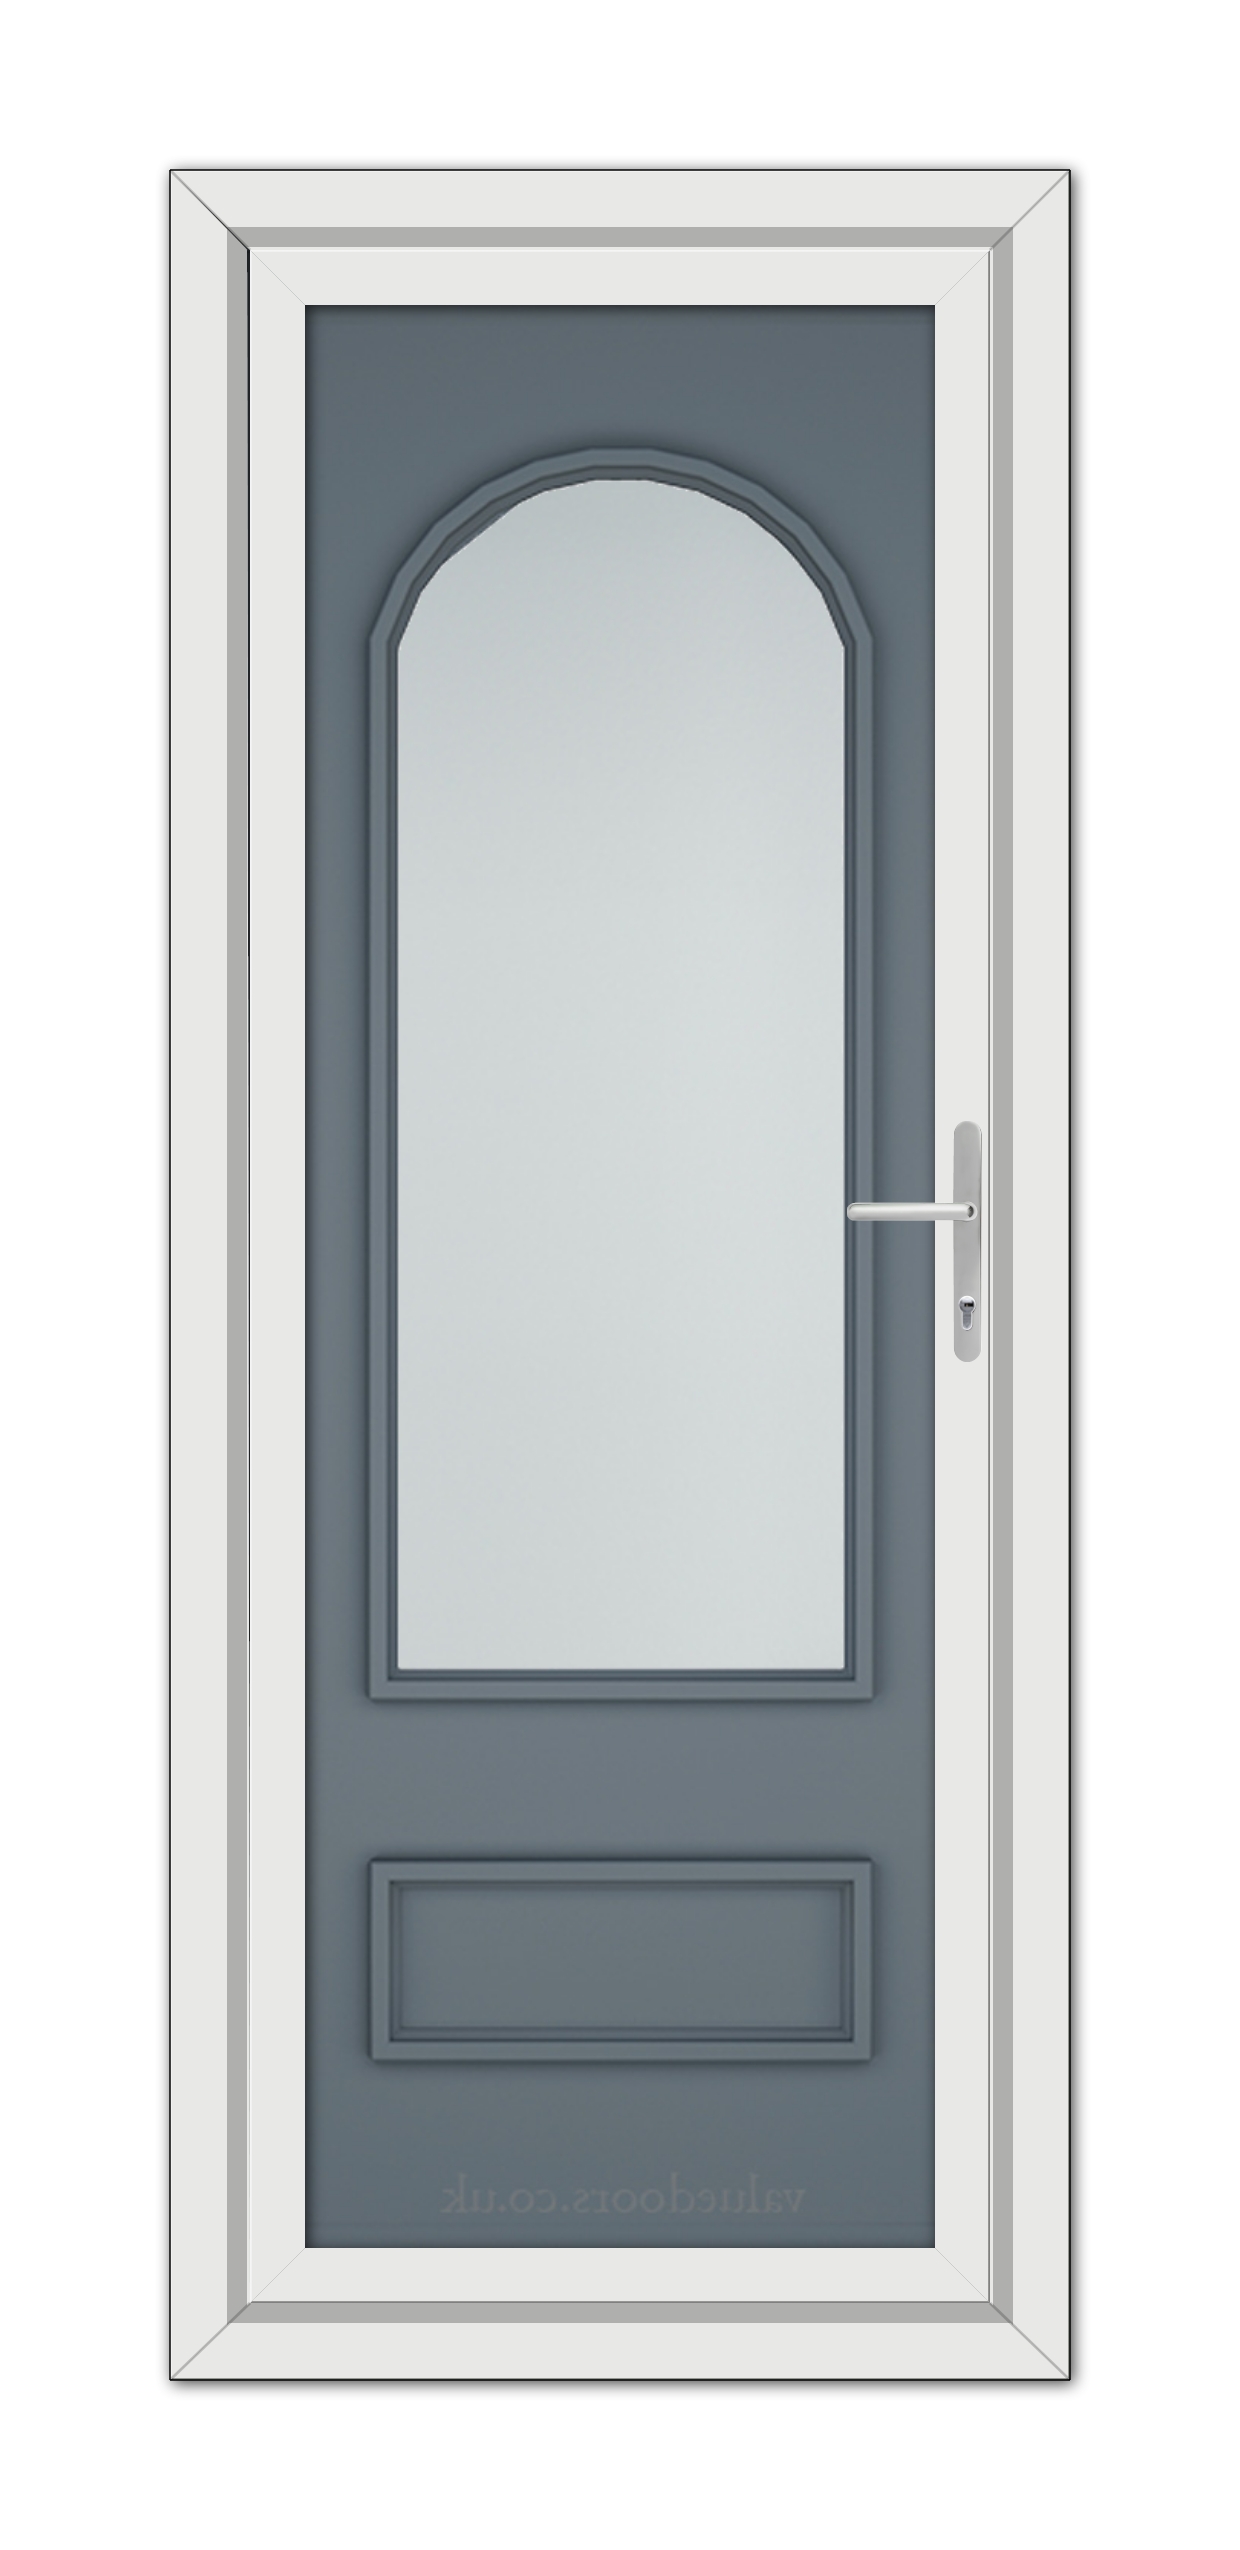 Slate Grey Canterbury uPVC Door with a glass panel.